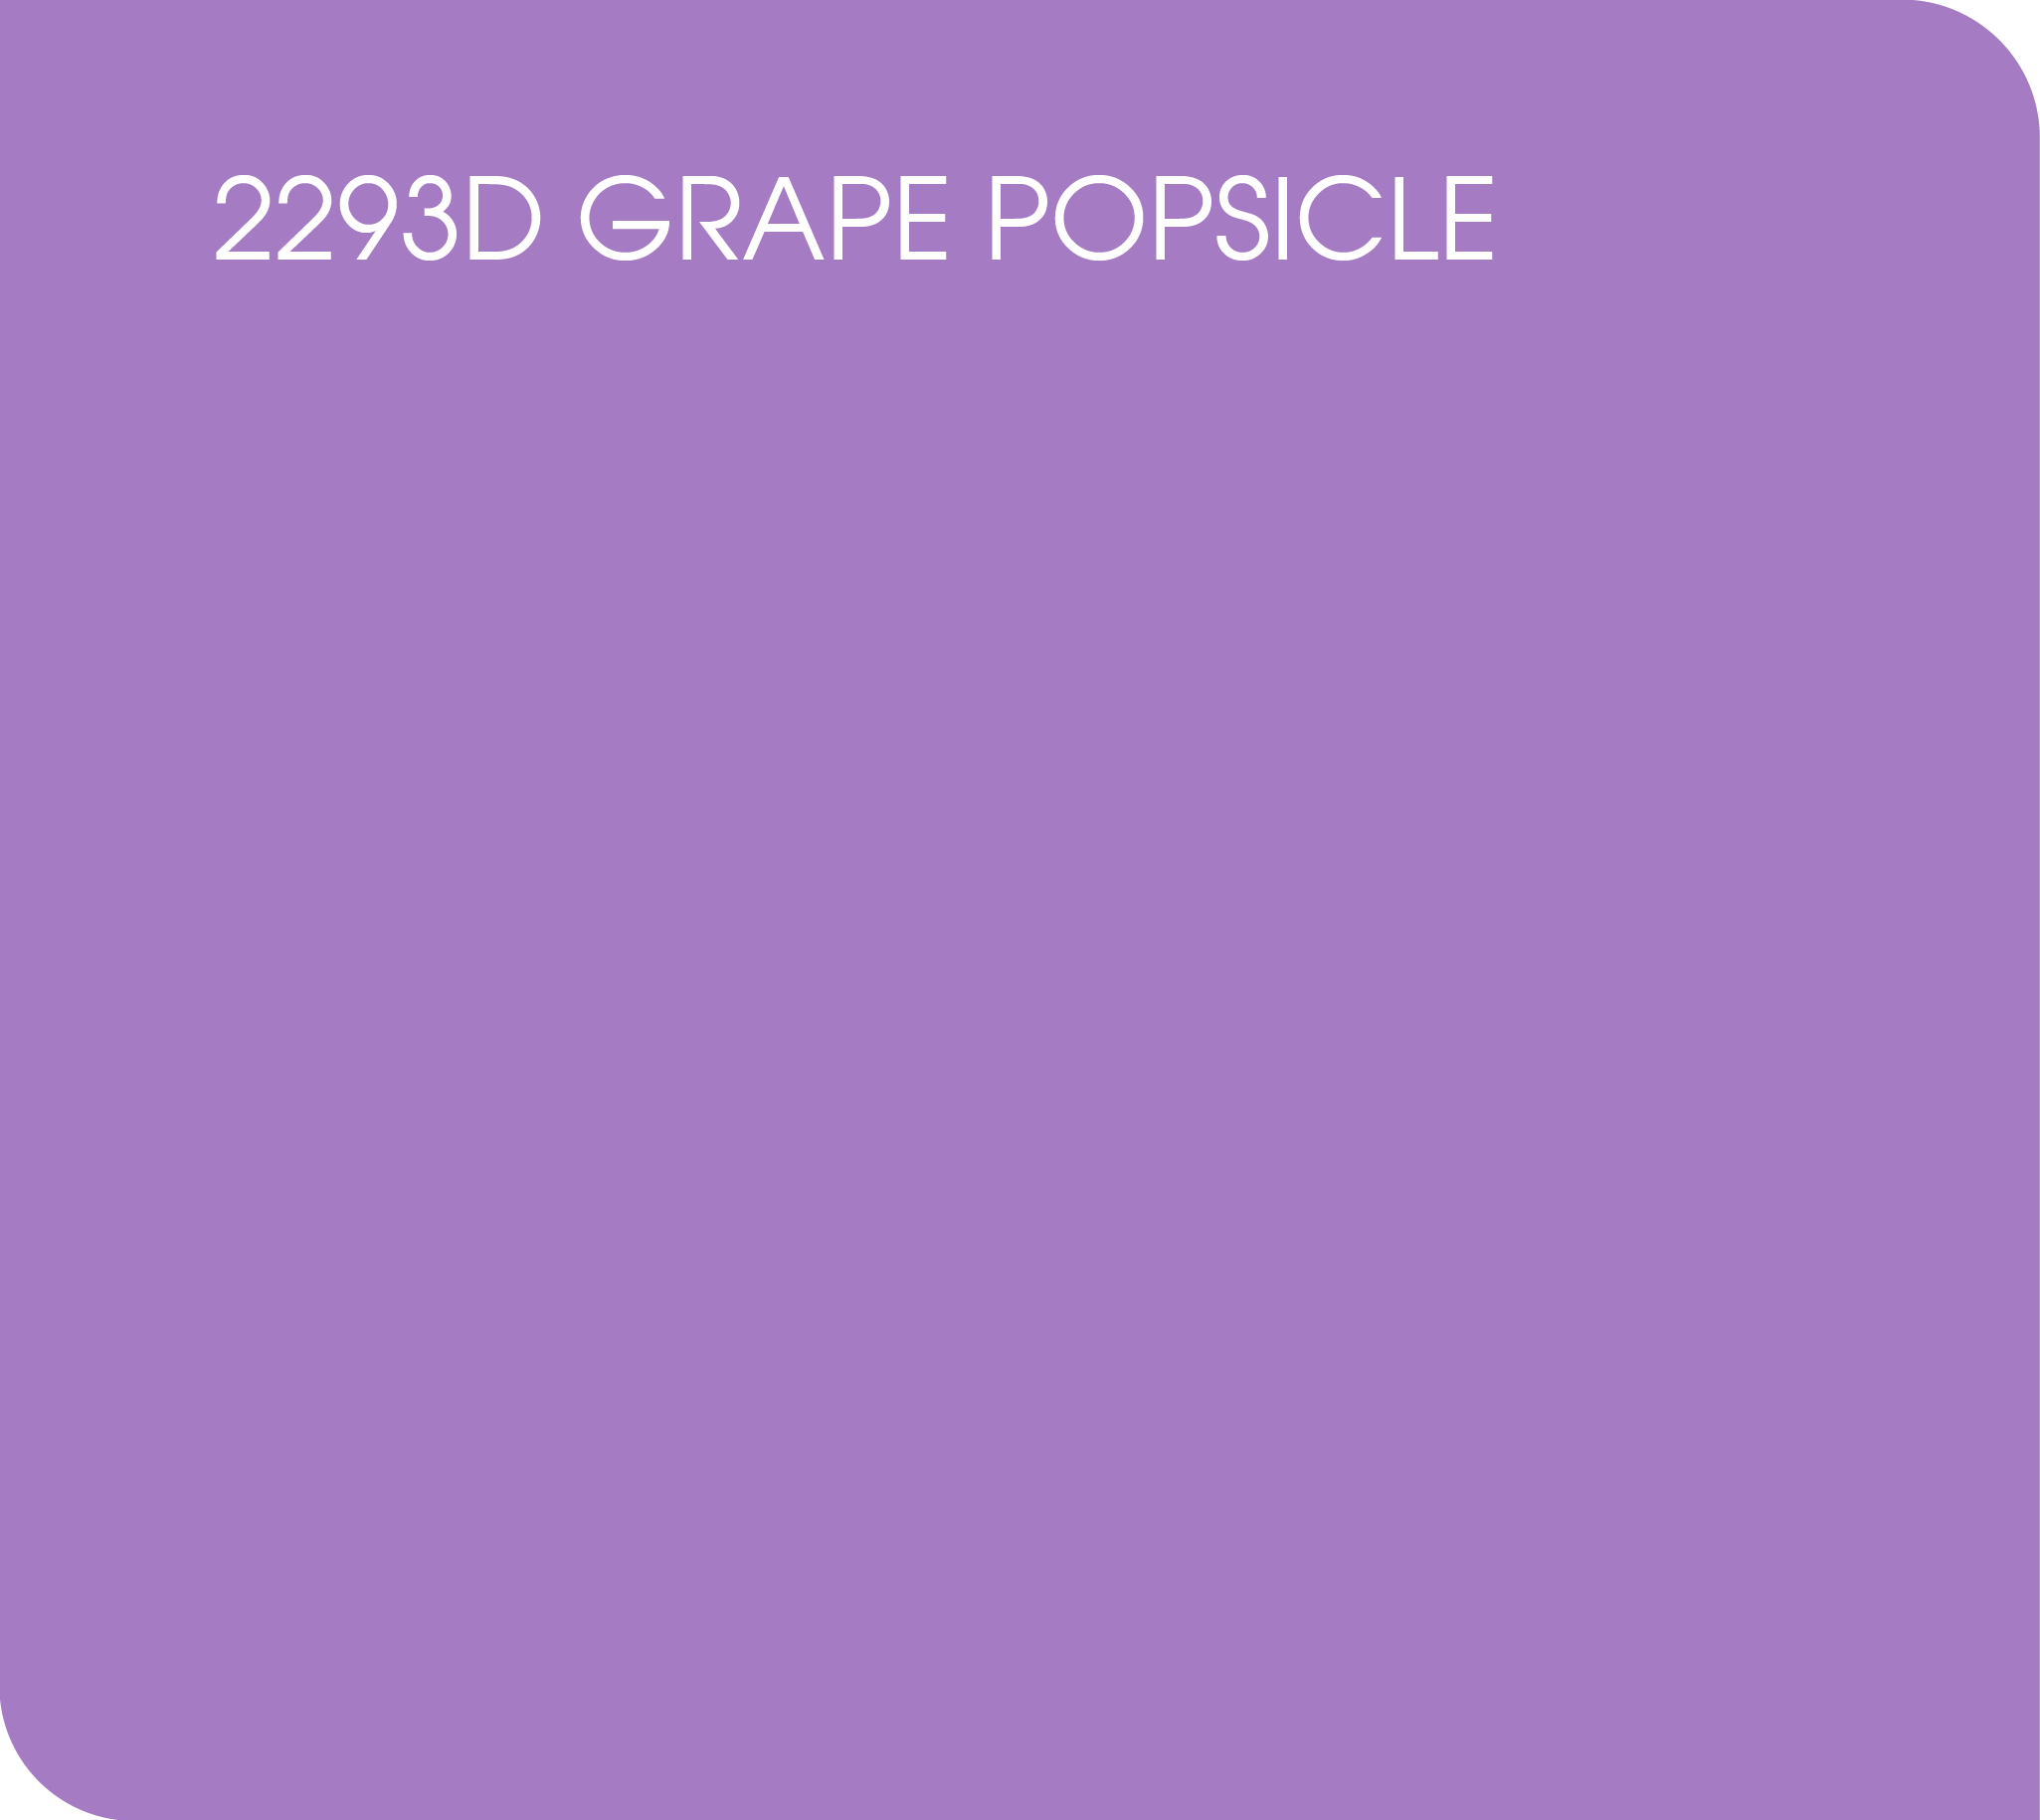 grape popsicle